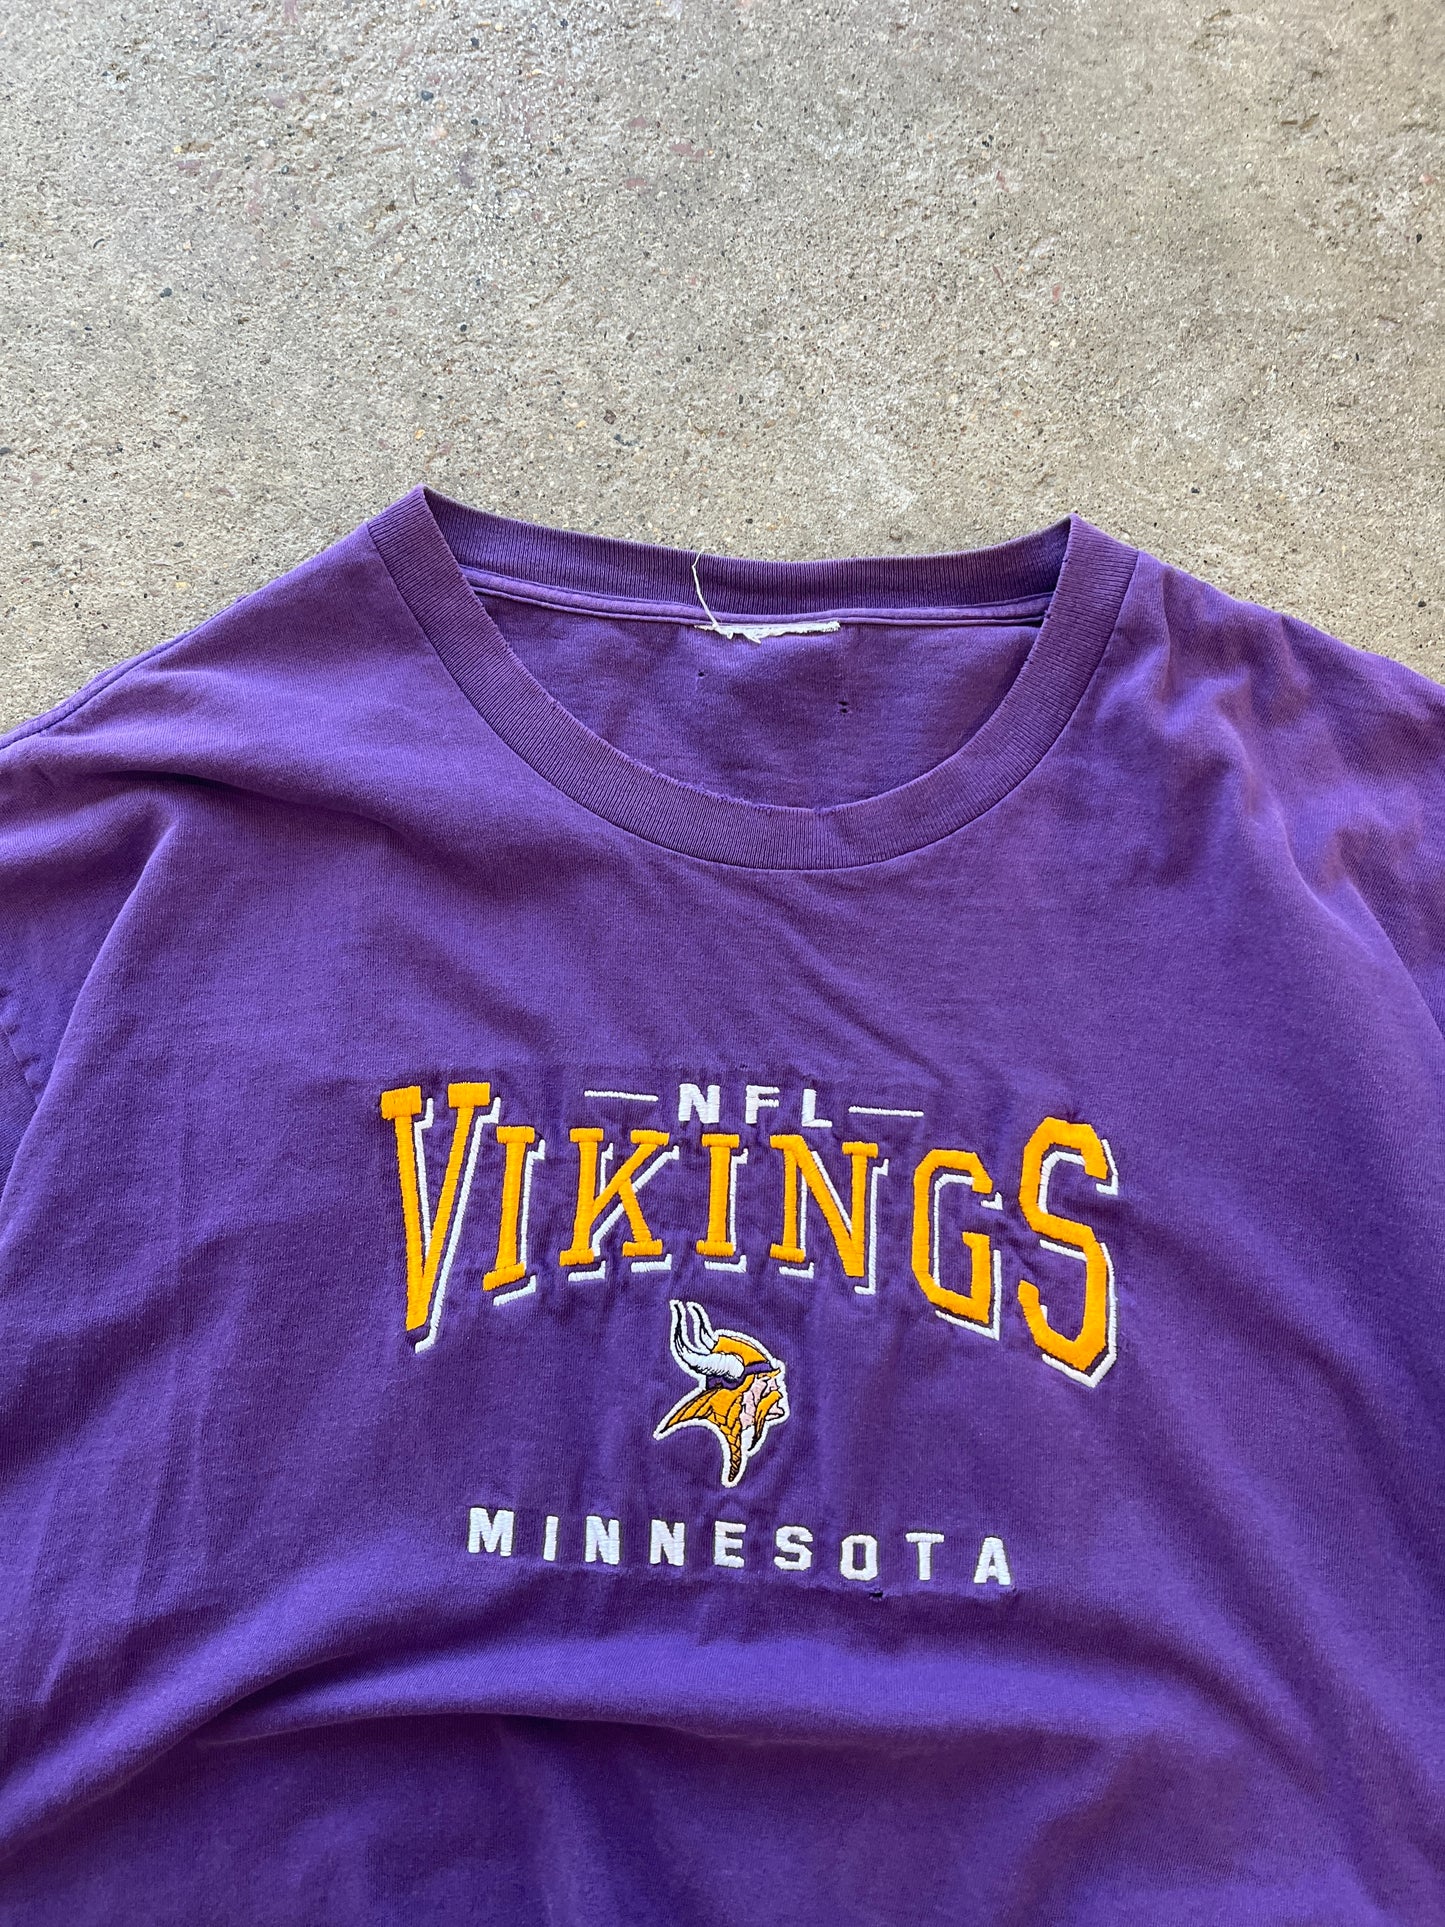 Vintage Minnesota Vikings Shirt - XXL